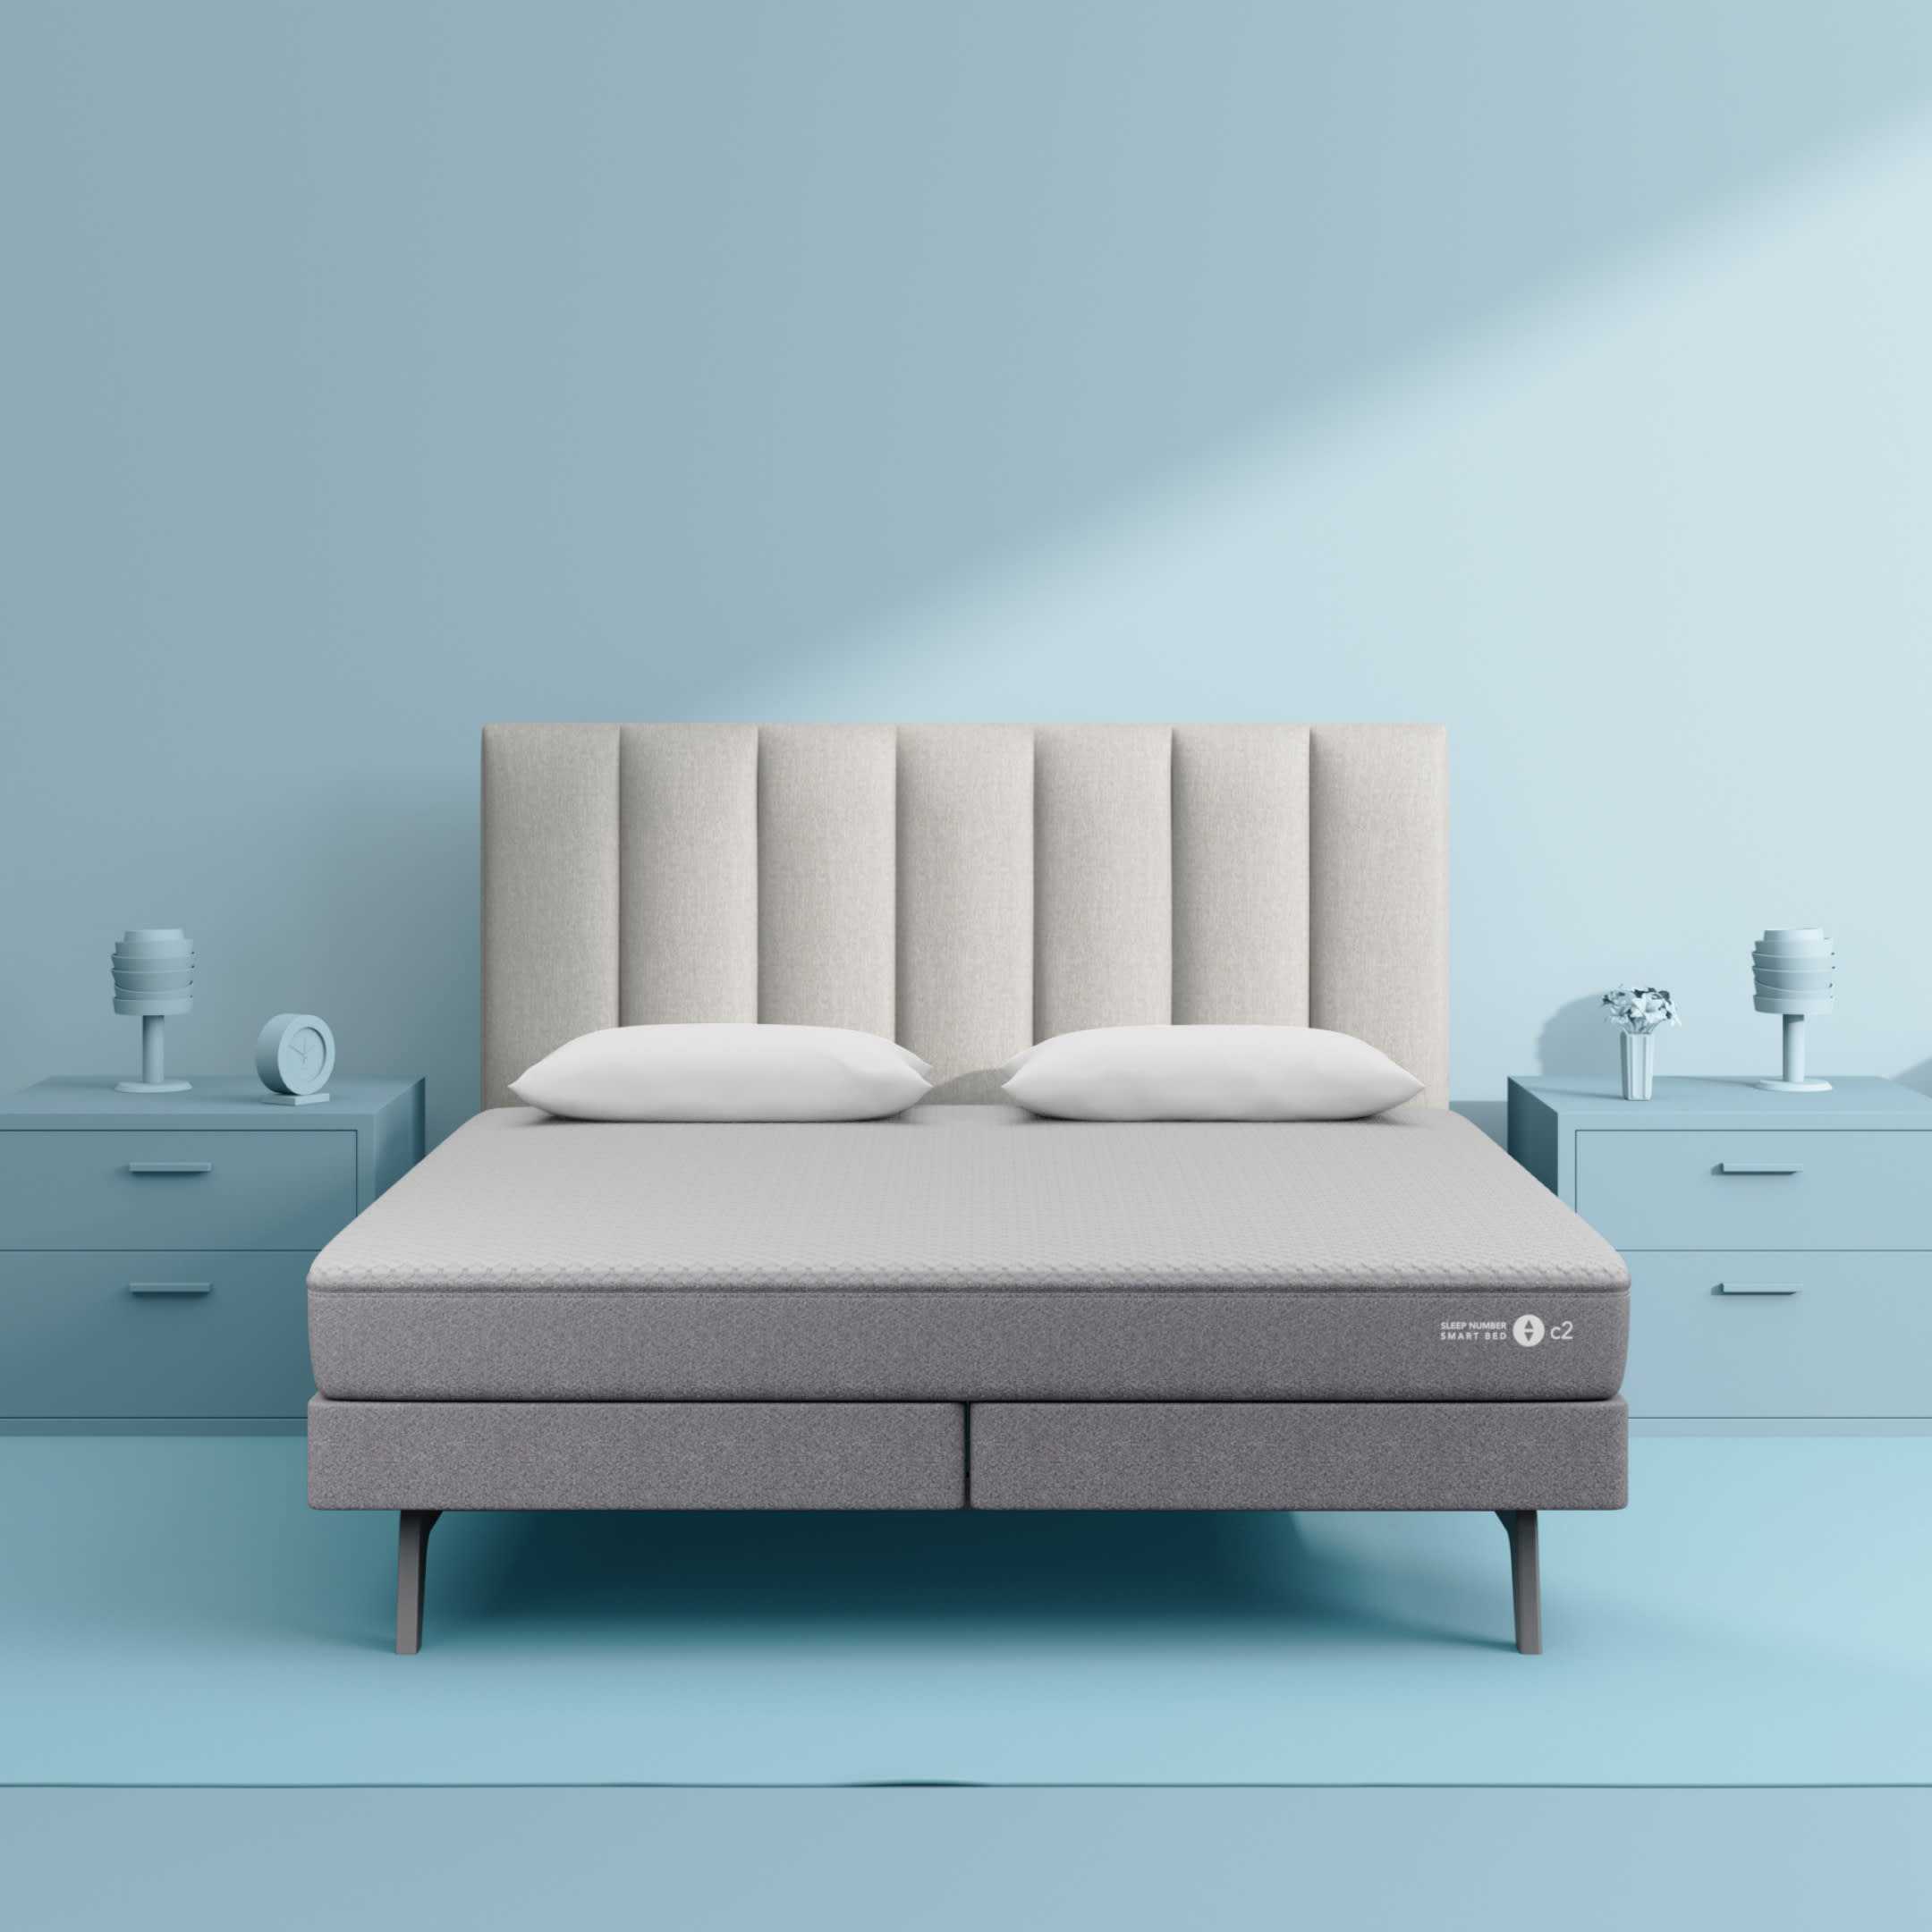 Sleep Number C2 Smart Bed - California King Mattress Adjustable Firmness